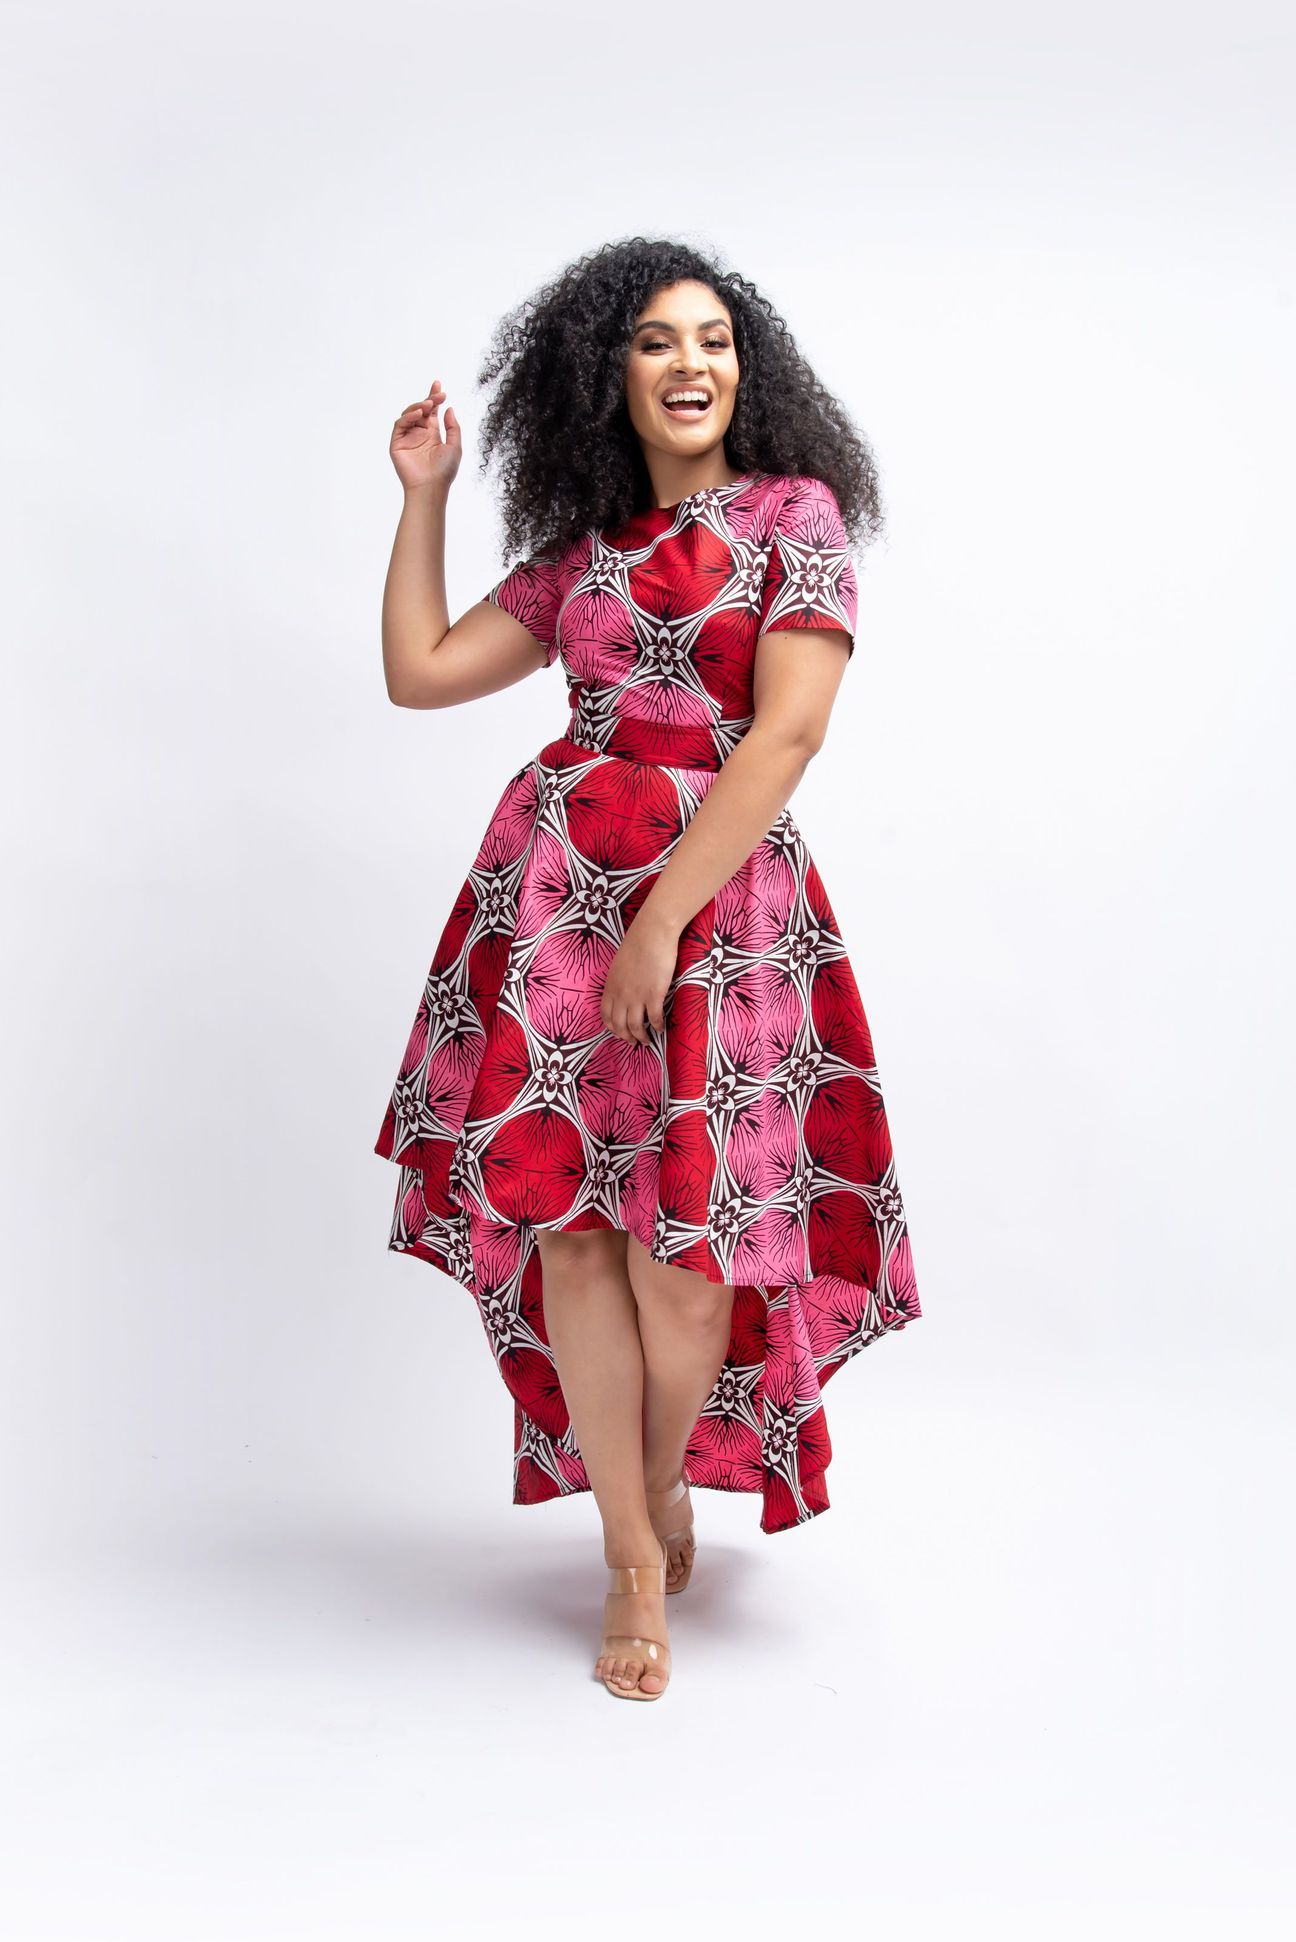 Dress to Impress in Ofuure's African Summer Dresses - Jamila Kyari